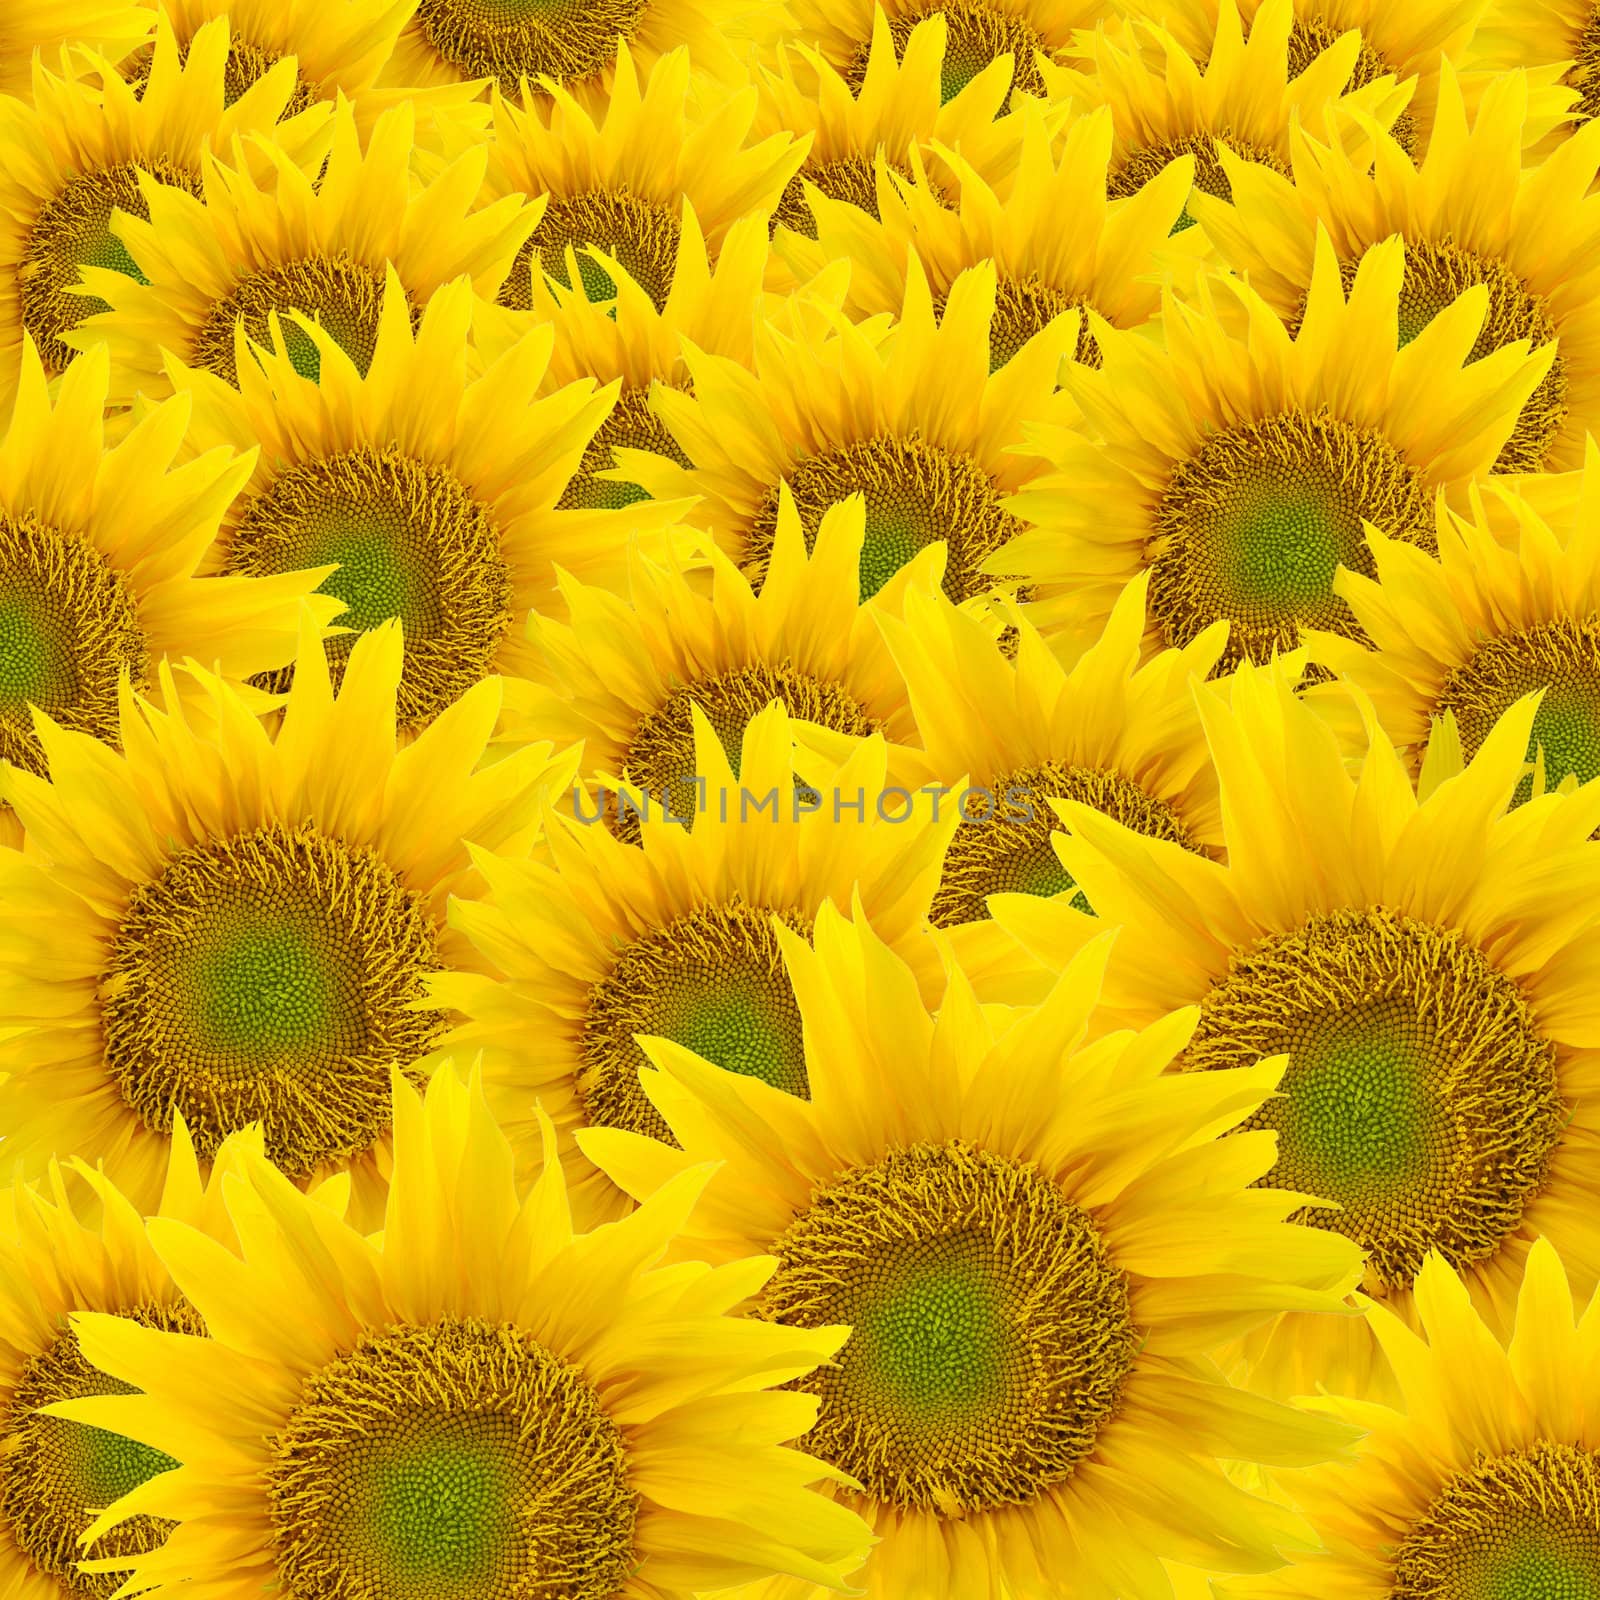  Sunflower background by antpkr